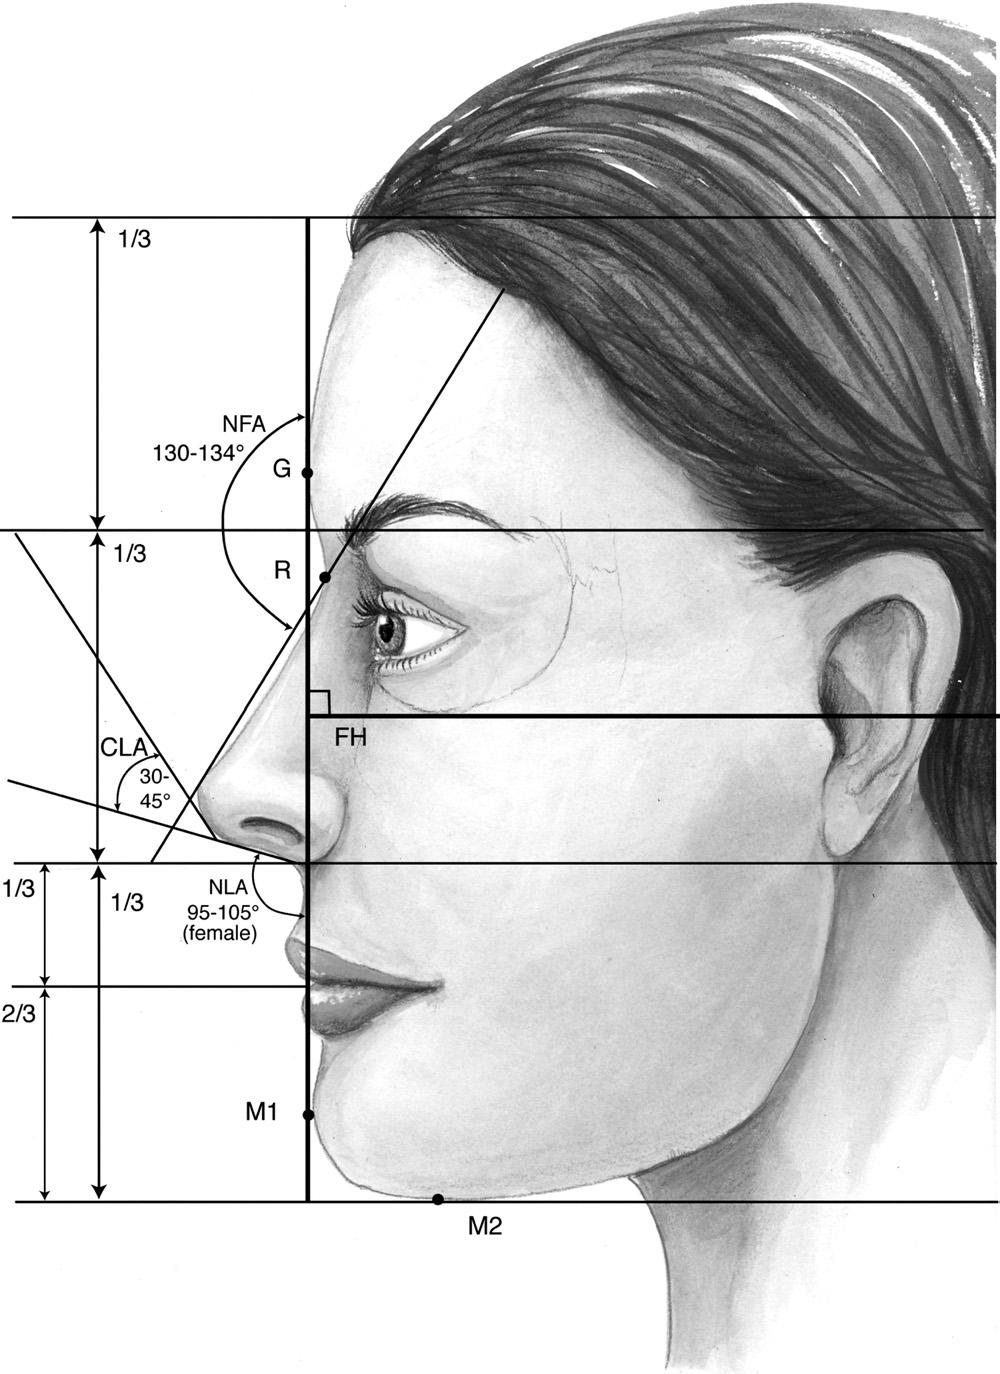 236 Operative Techniques in Otolaryngology, Vol 18, No 3,